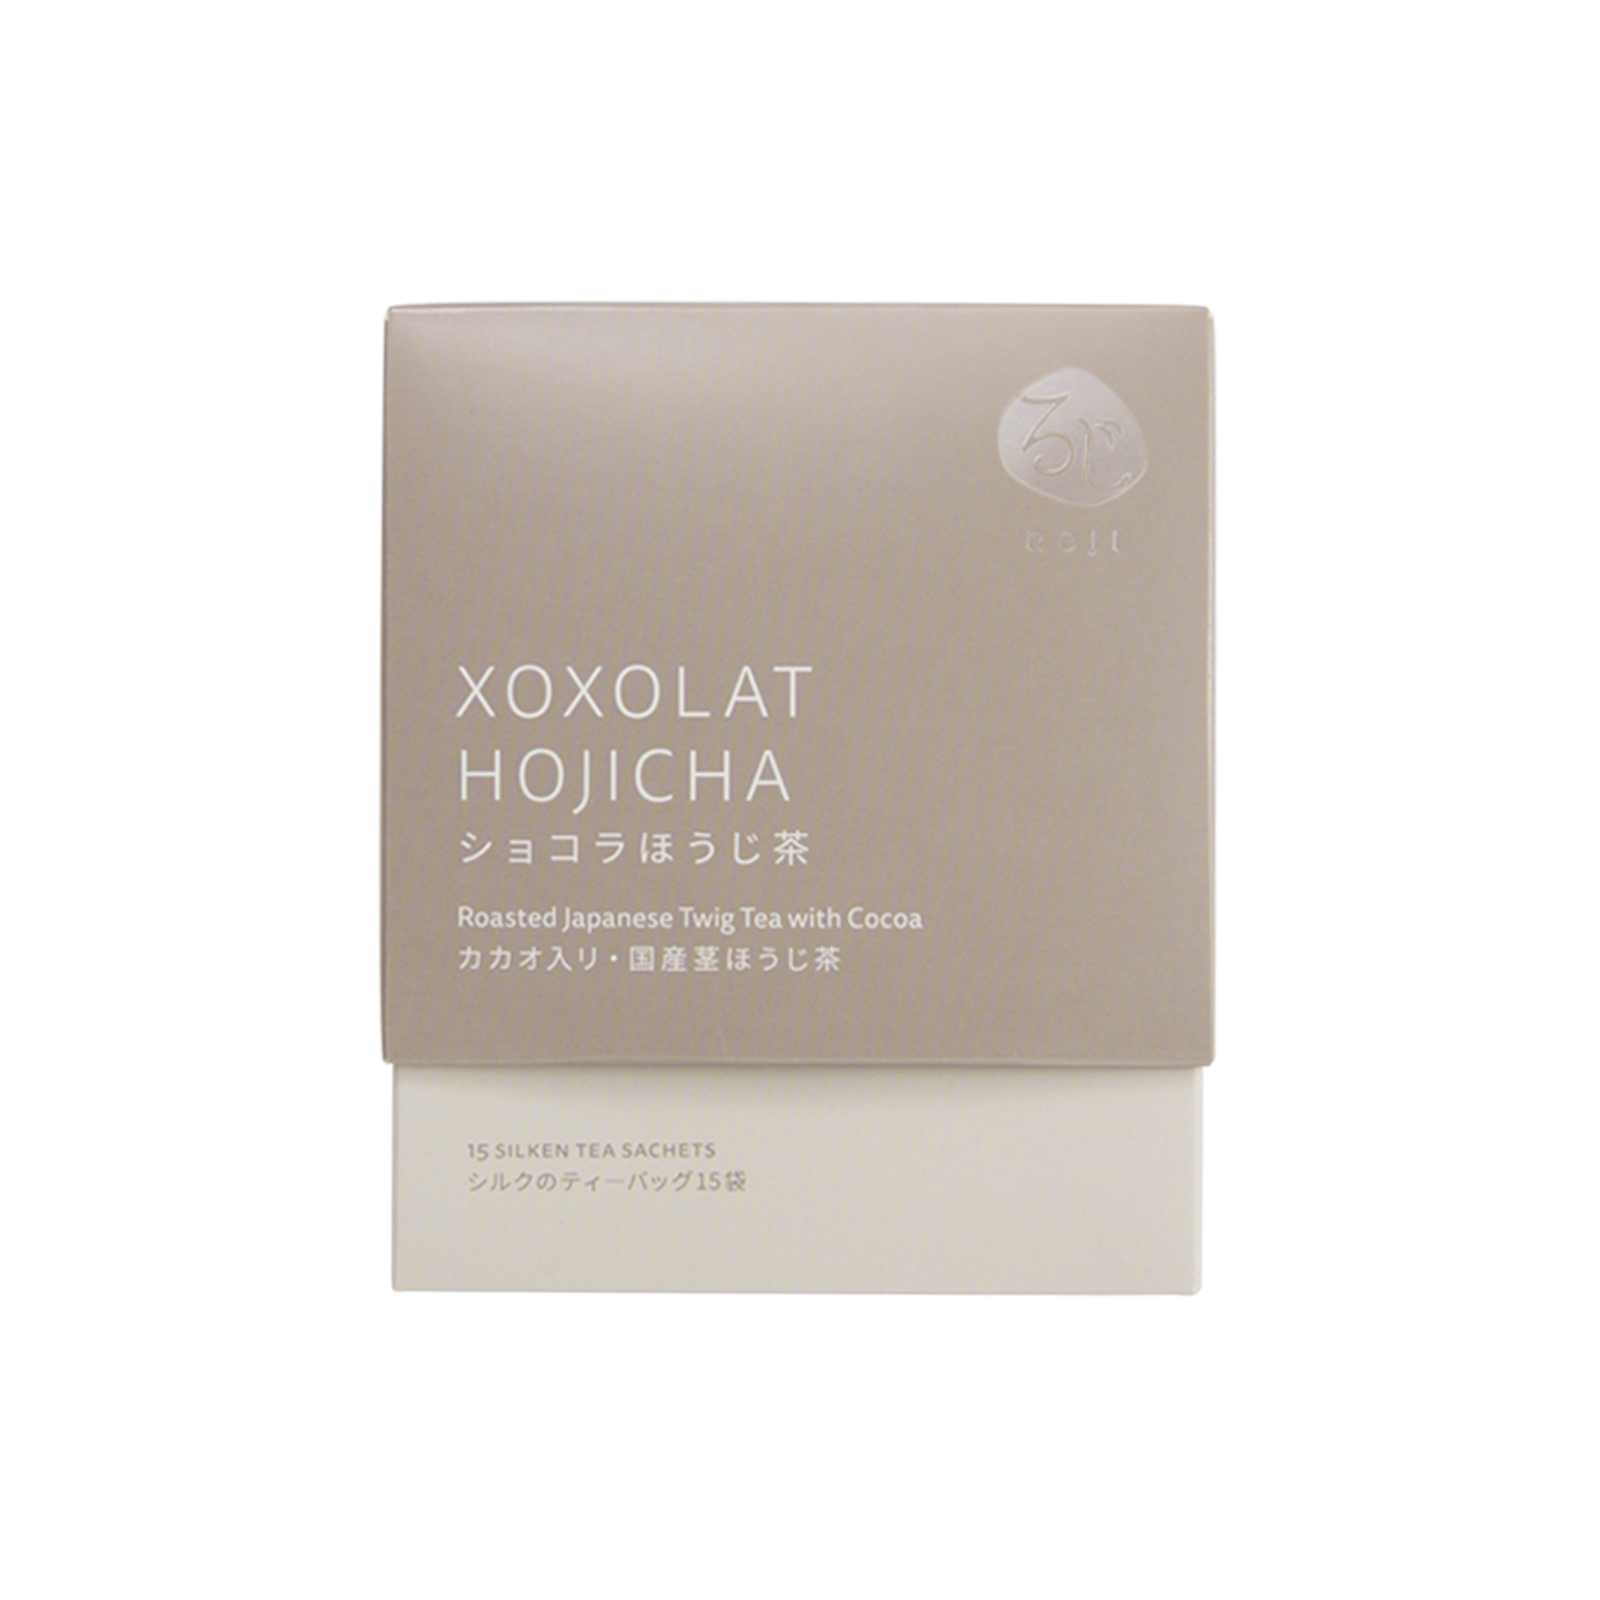 [ROJI CHA] Xoxolat Hojicha Roasted Japanese Twig Tea with Cocoa - 15 Sachets